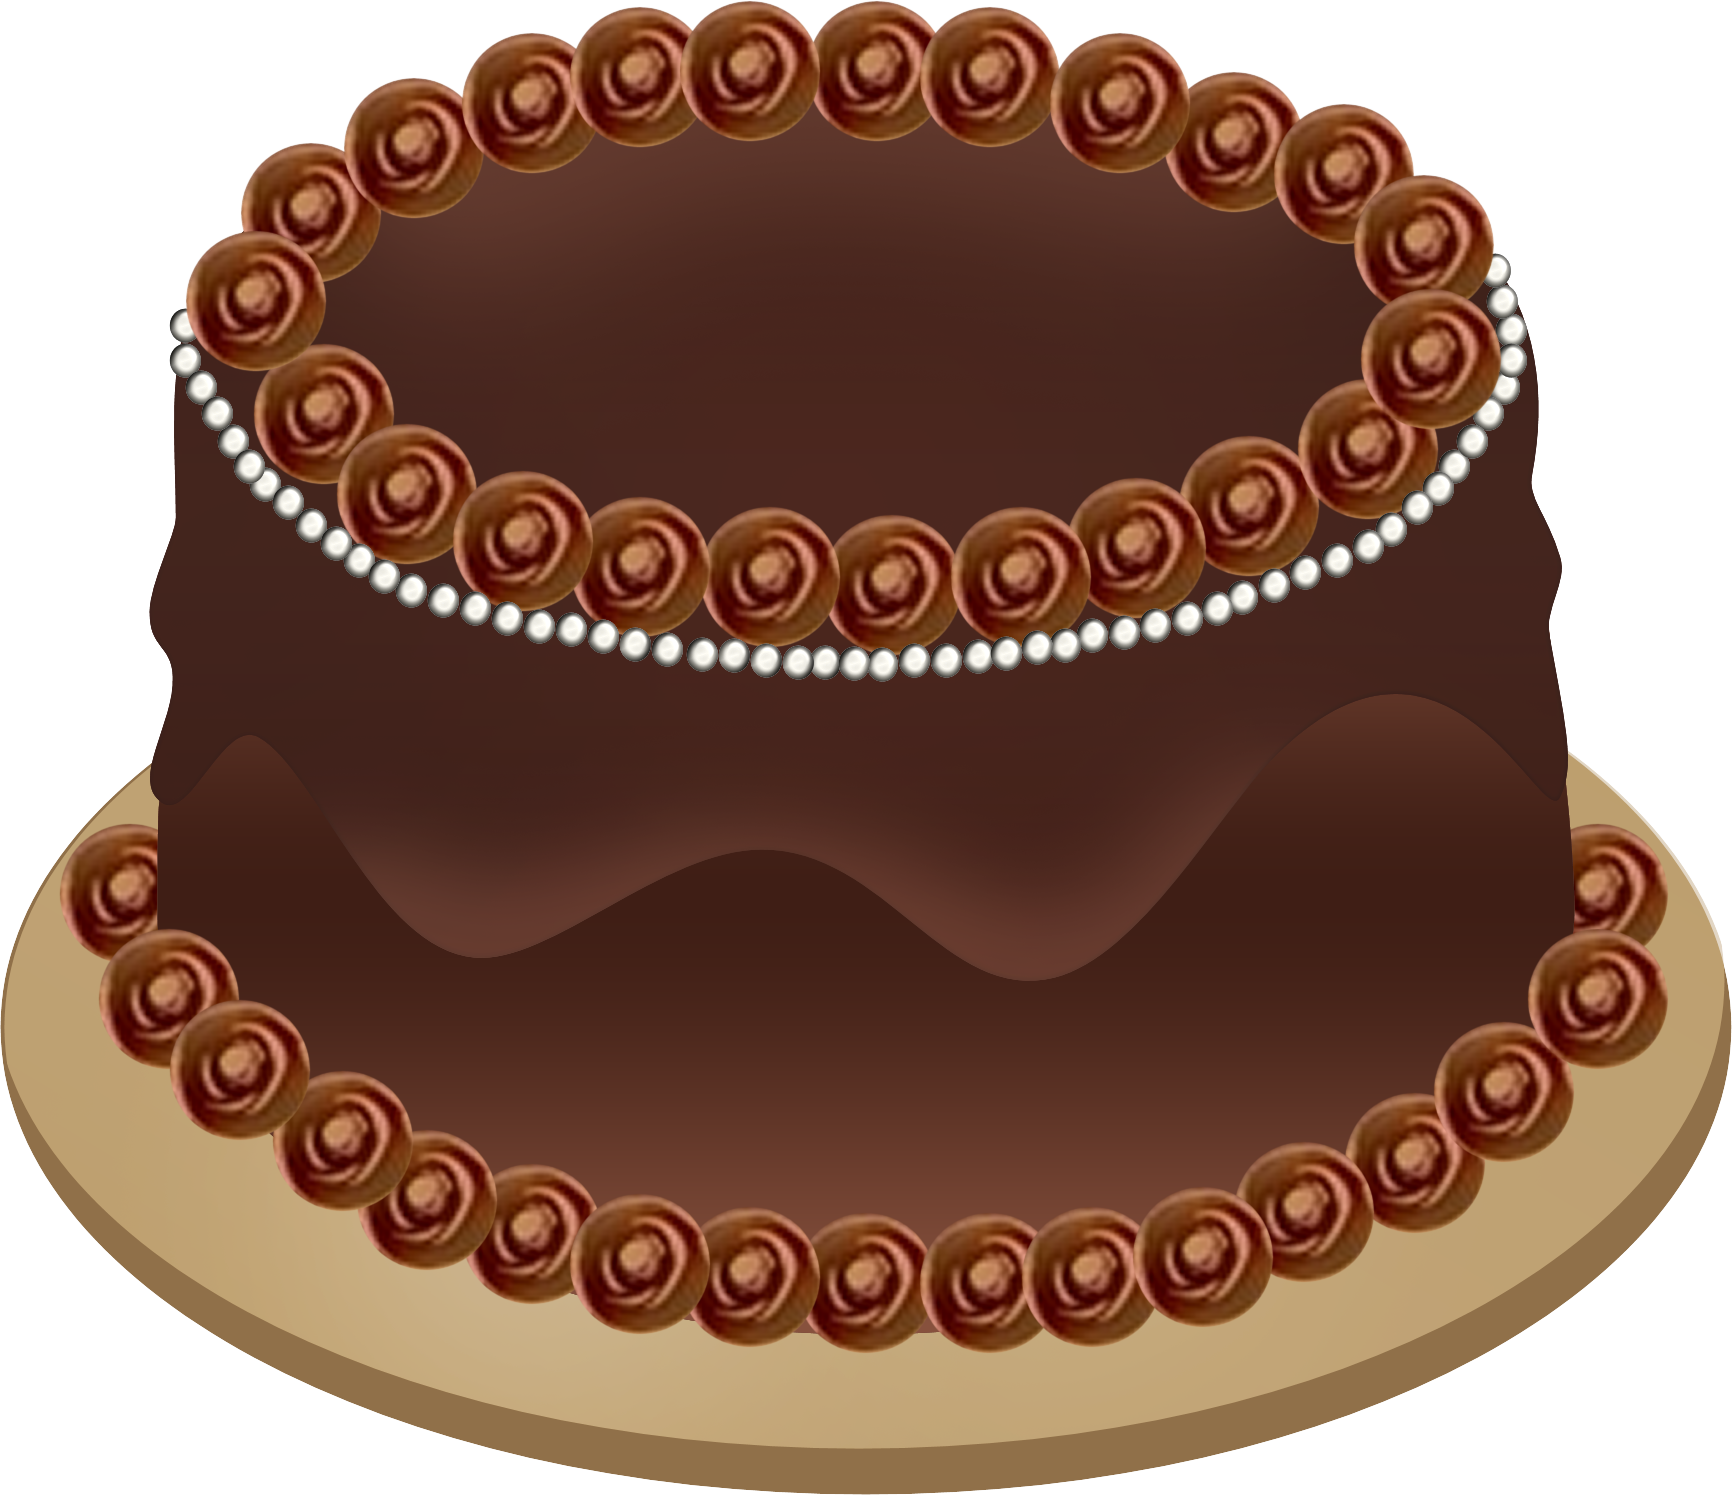 Chocolate Cake Black And White Danaspai Top Clipart